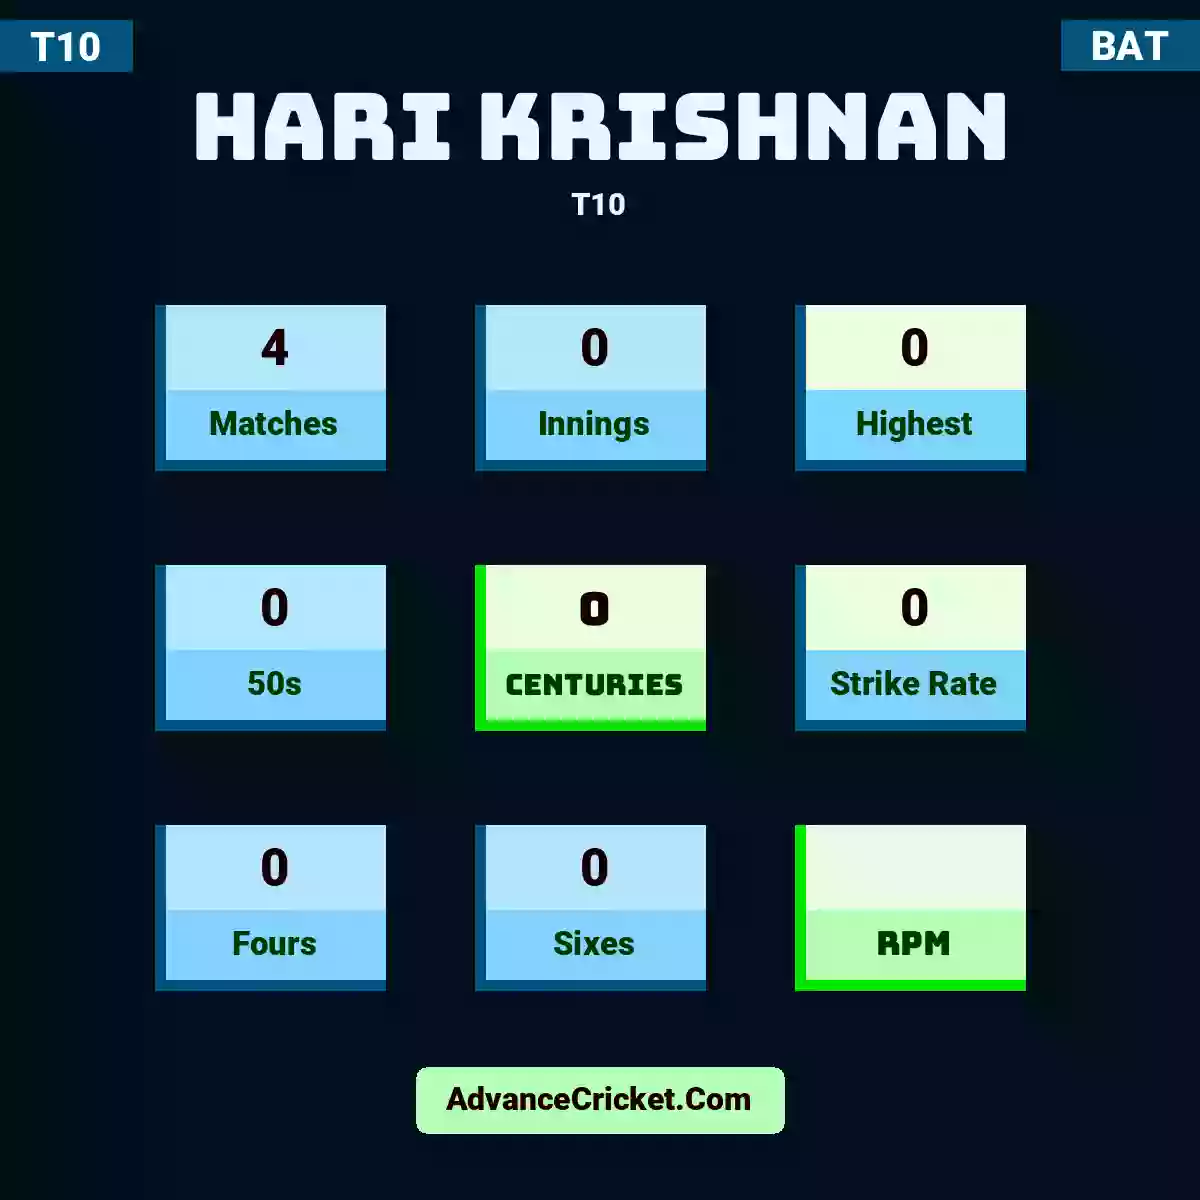 Hari Krishnan T10 , Hari Krishnan played 4 matches, scored 0 runs as highest, 0 half-centuries, and 0 centuries, with a strike rate of 0. H.Krishnan hit 0 fours and 0 sixes.